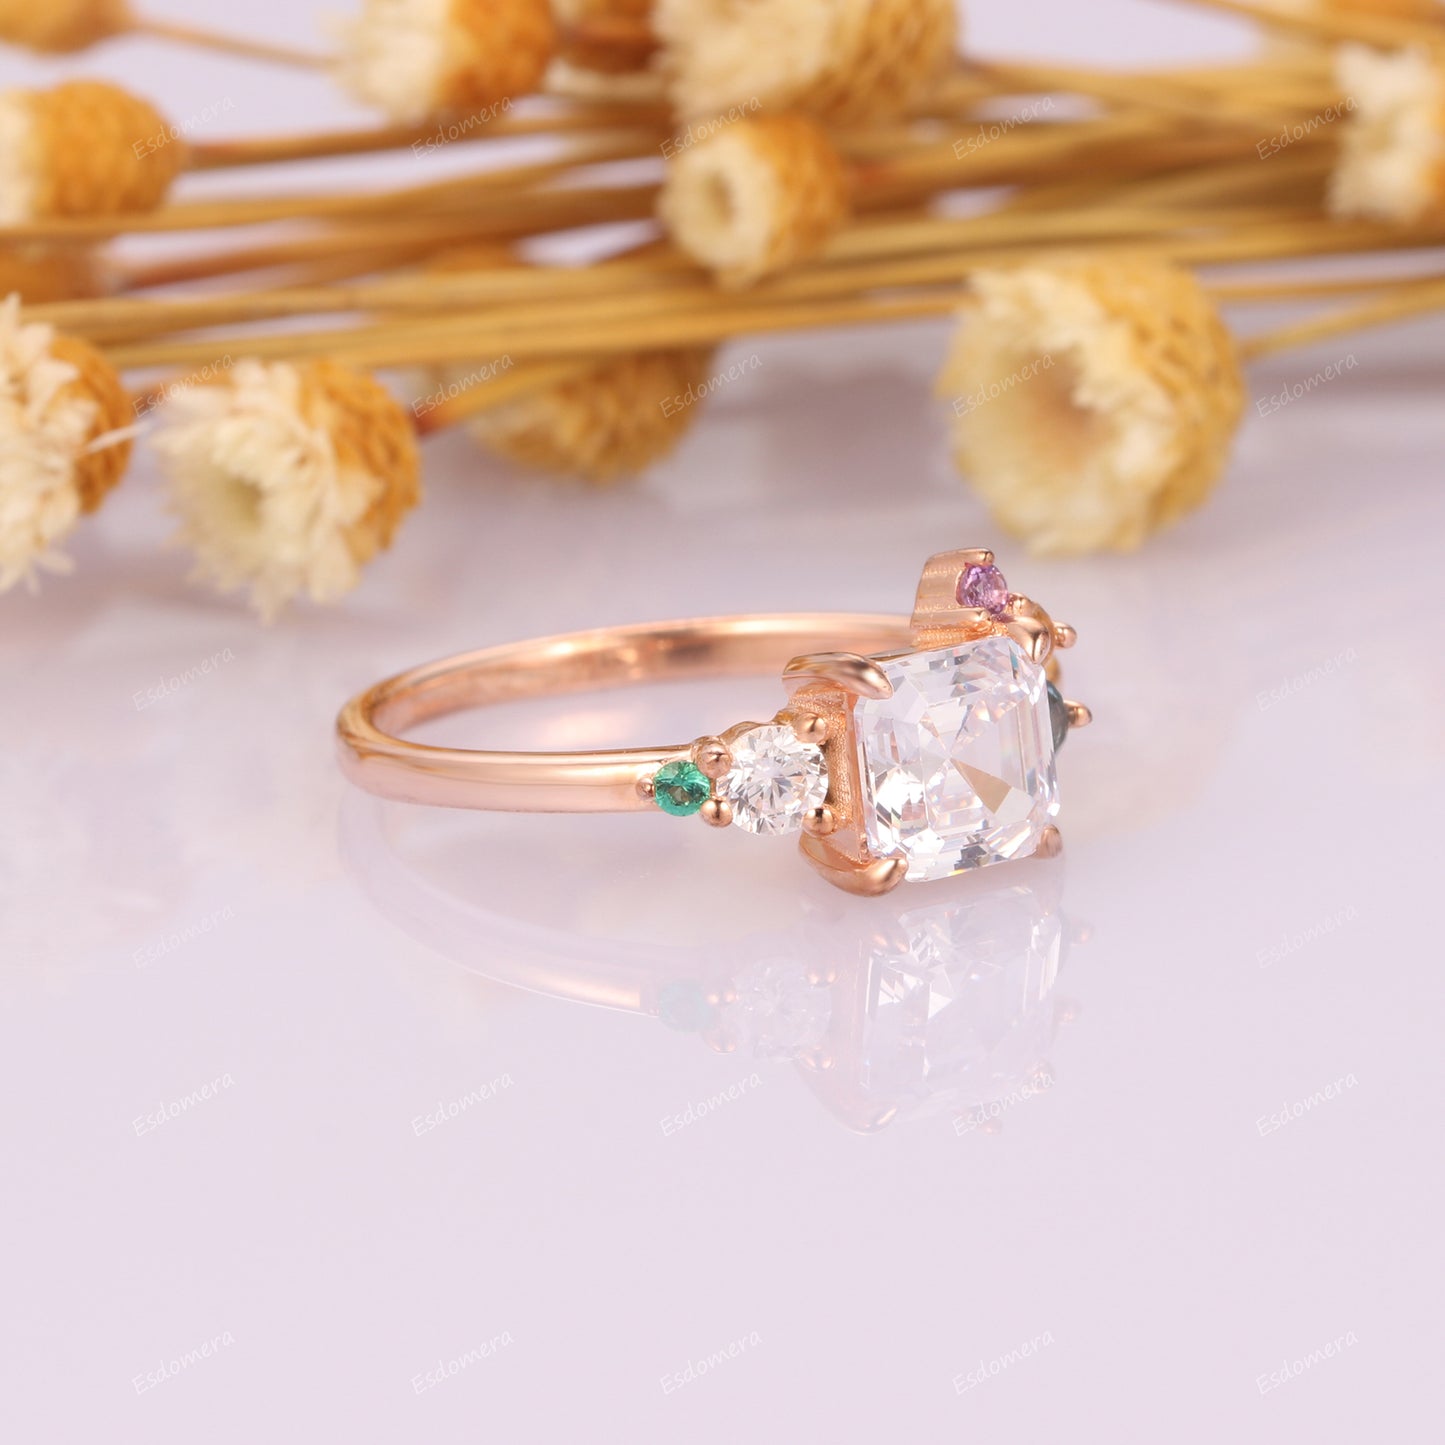 6x6mm Asscher Cut Moissanite Promise Ring, Gemstone Cluster Engagement Ring For Her, Unique 14k Rose Gold Bridal Ring